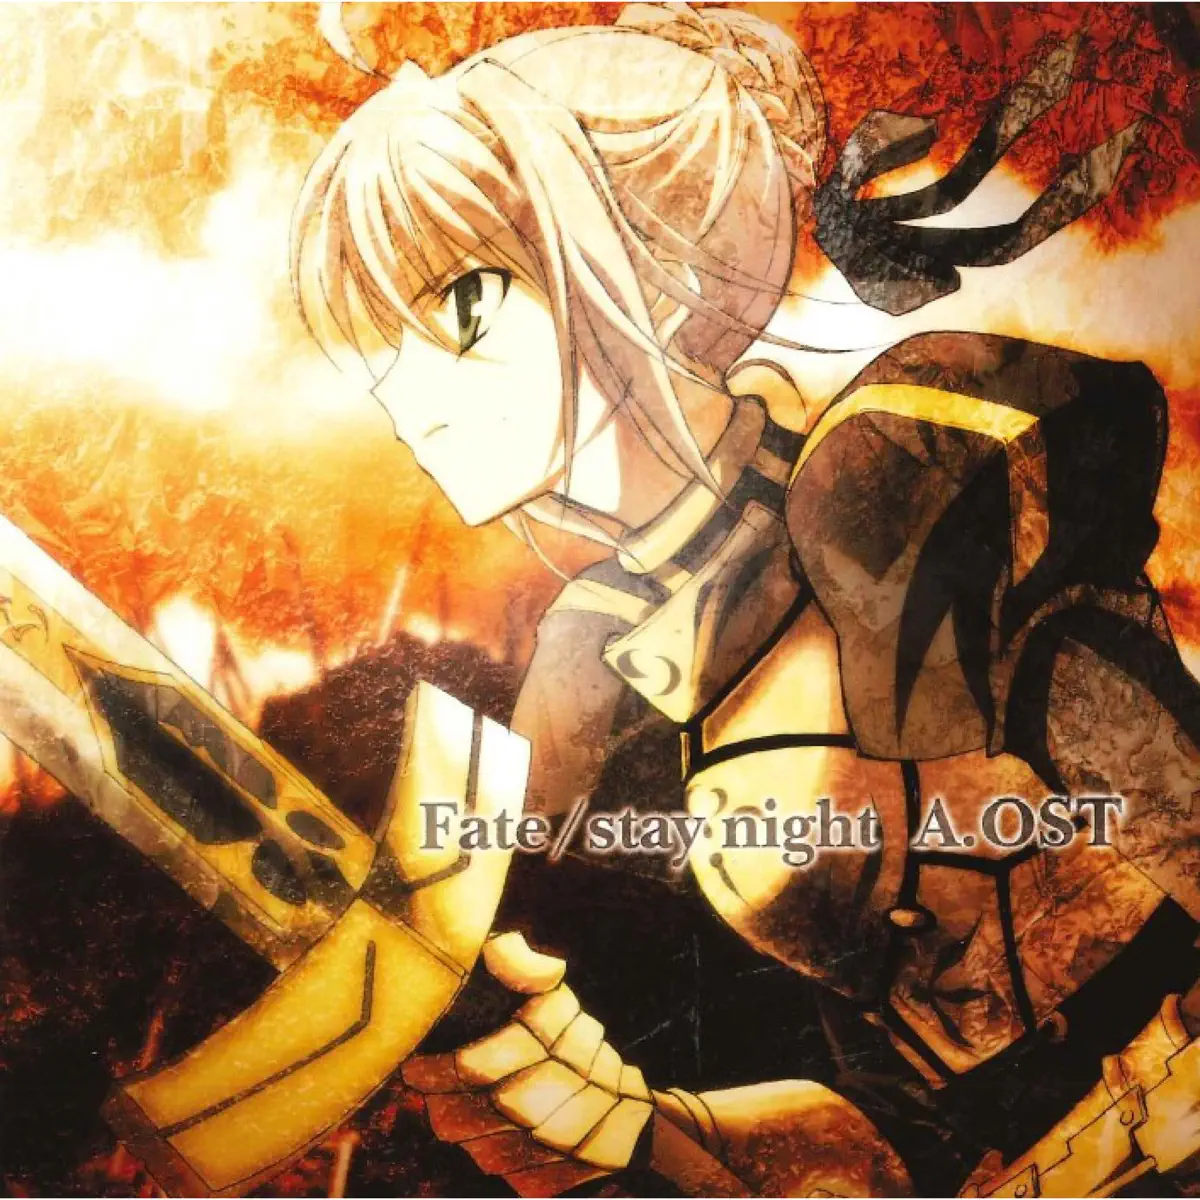 川井憲次 - 命运守护夜 TVアニメ「Fate/stay night A.OST」 (2006) [iTunes Plus AAC M4A]-新房子